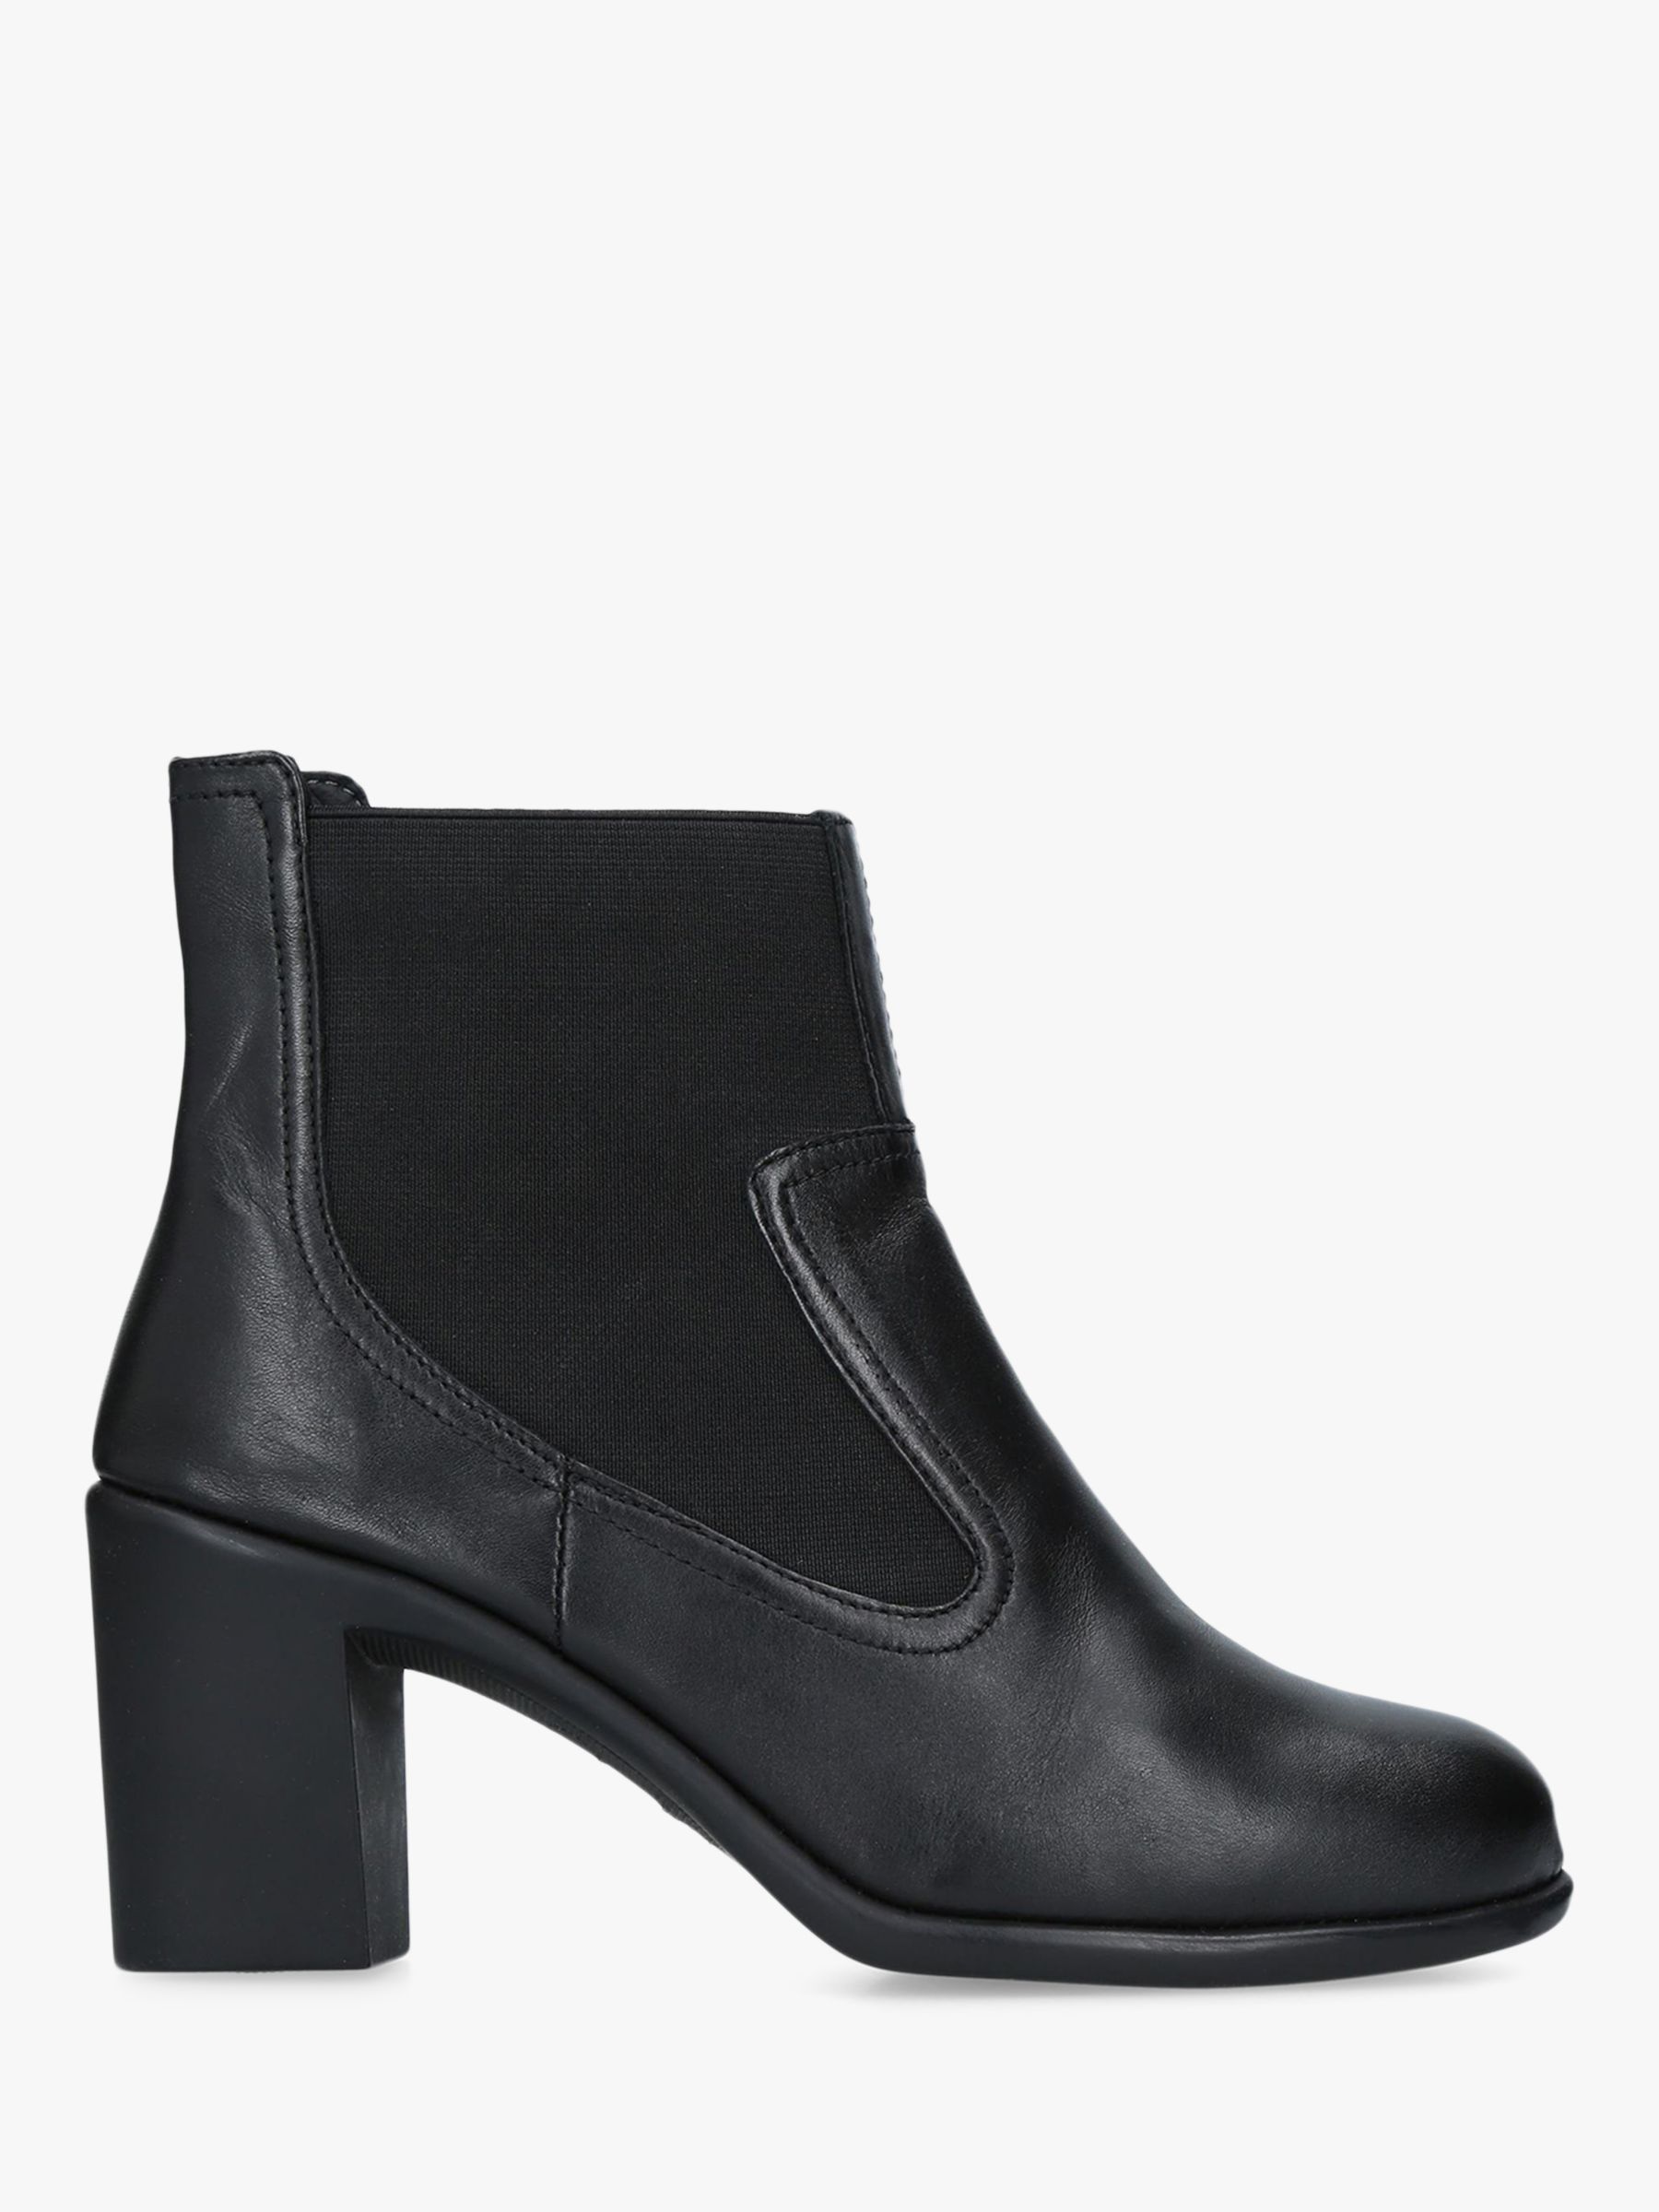 Carvela Comfort Roo Block Heel Ankle Boots, Black Leather